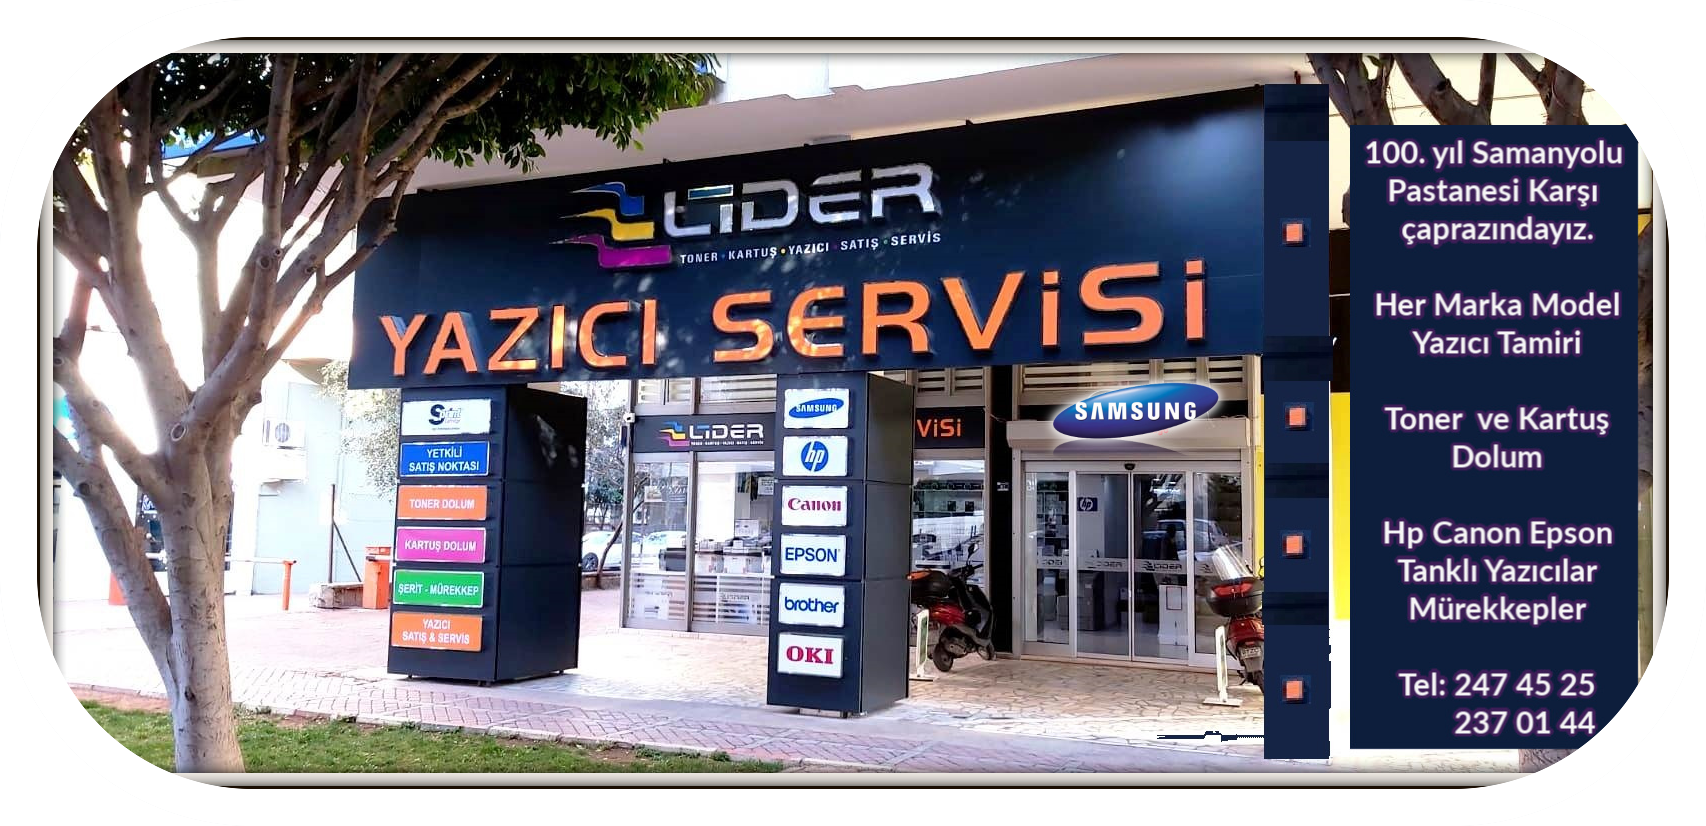  Lider Toner Kartuş Dolum Merkezi Antalya Samsung yazıcı servisi toner antalya